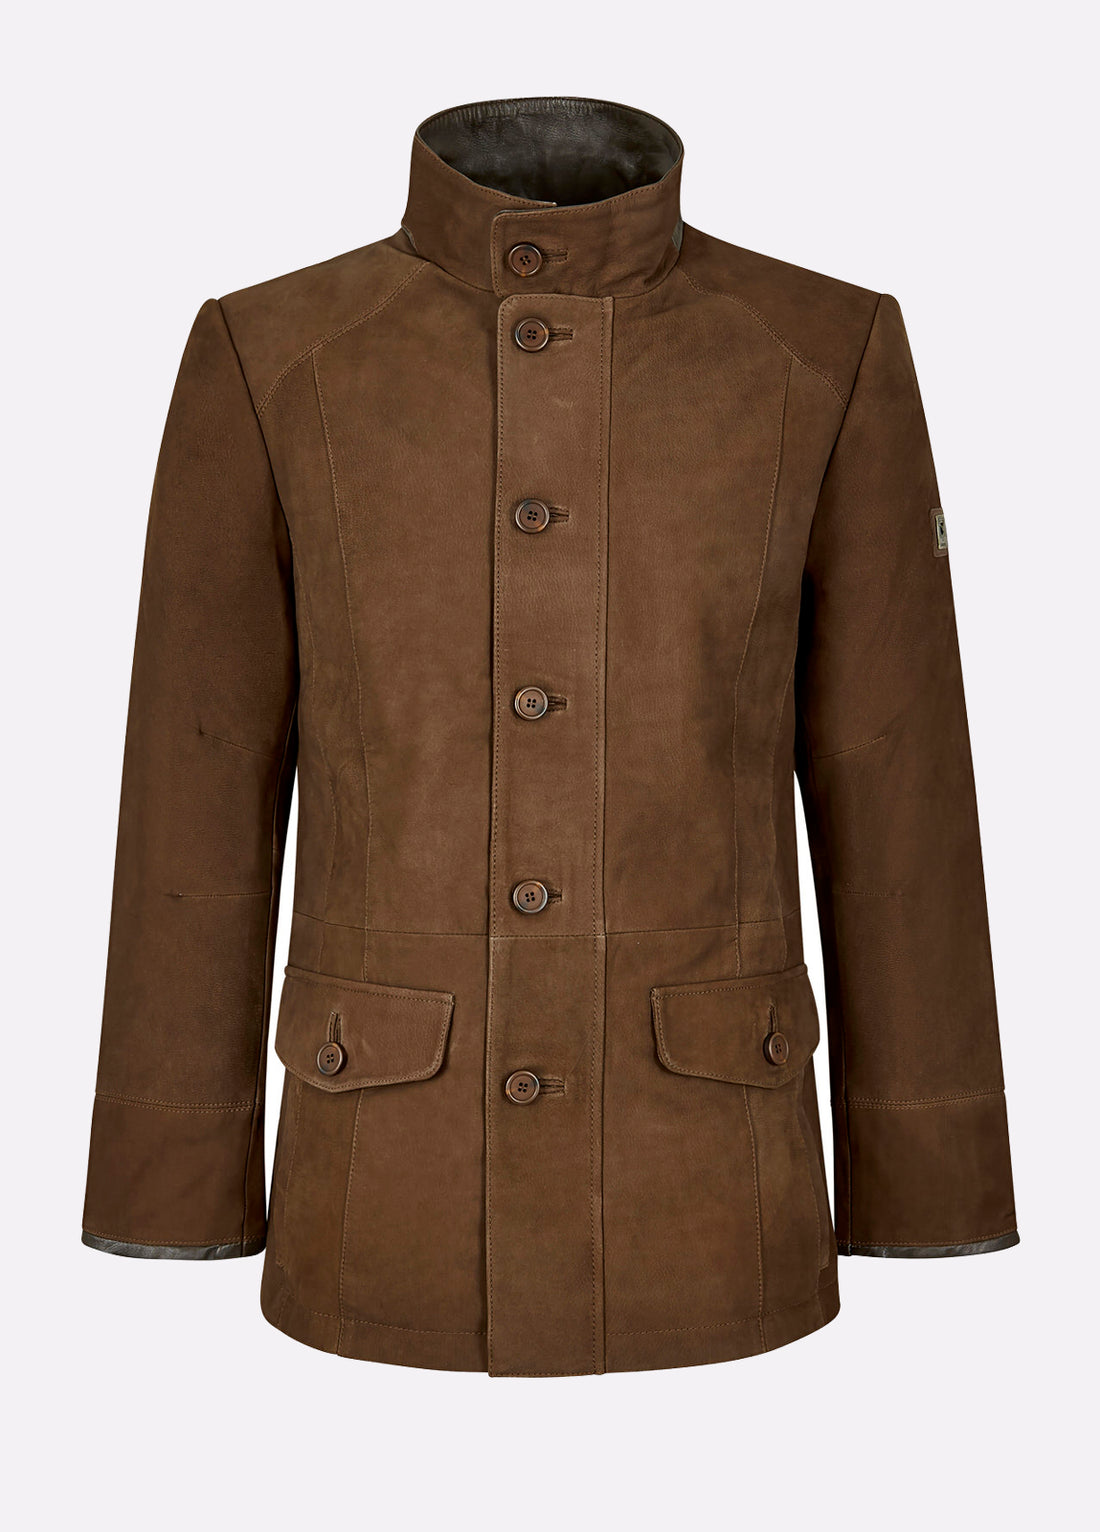 Moore Leather Jacket - Walnut